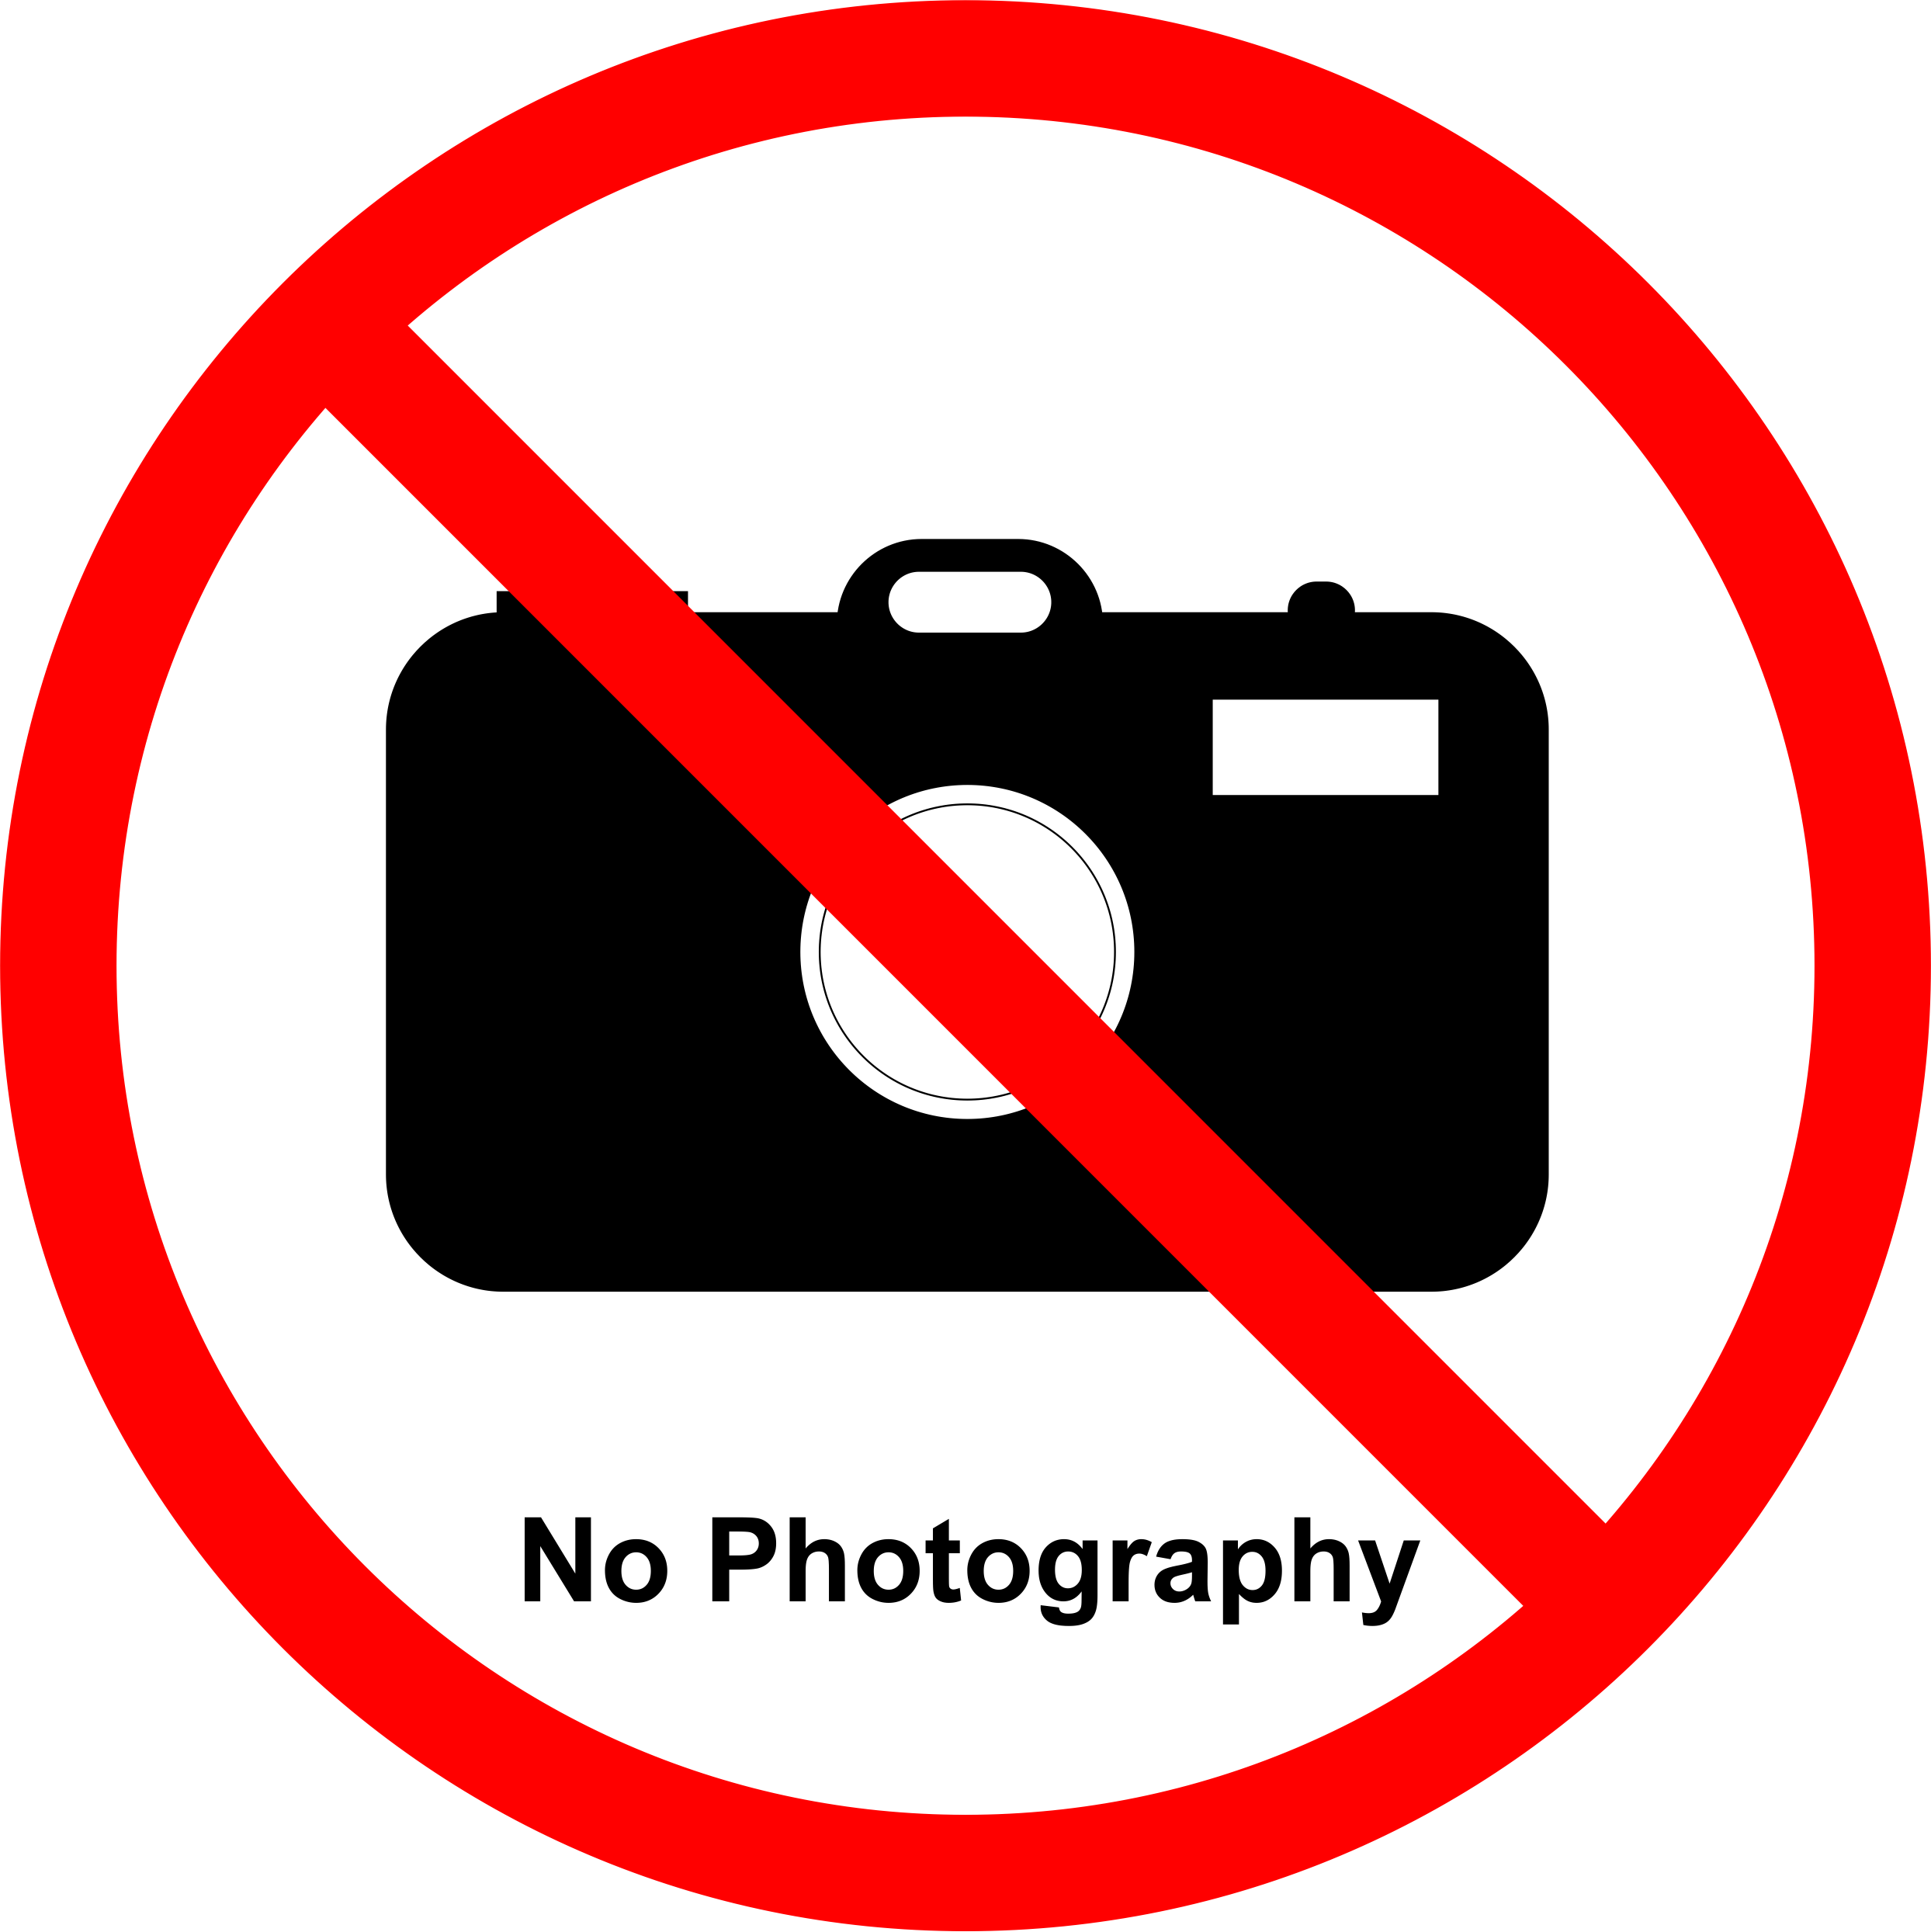 Additional property is not allowed. Фотосъемка запрещена. Знак «съемка запрещена». Знак не фотографировать без фона. Видеосъемка запрещена знак.